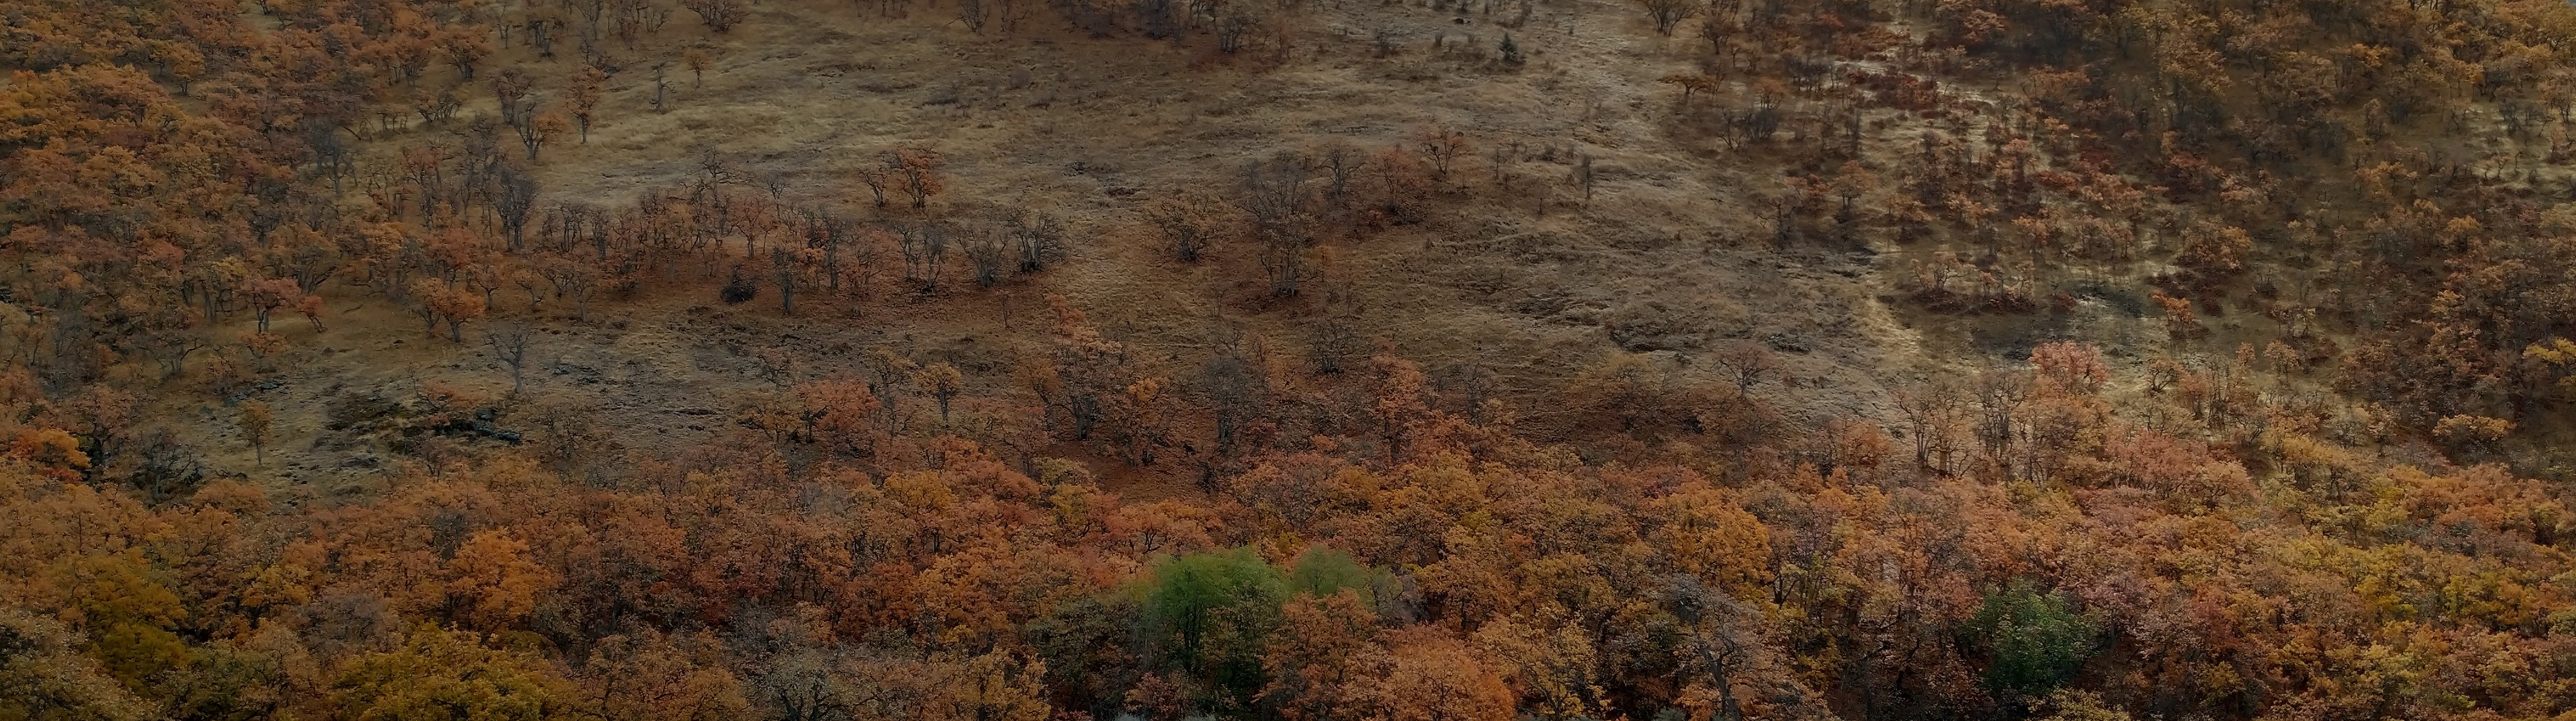 fall trees on hillside